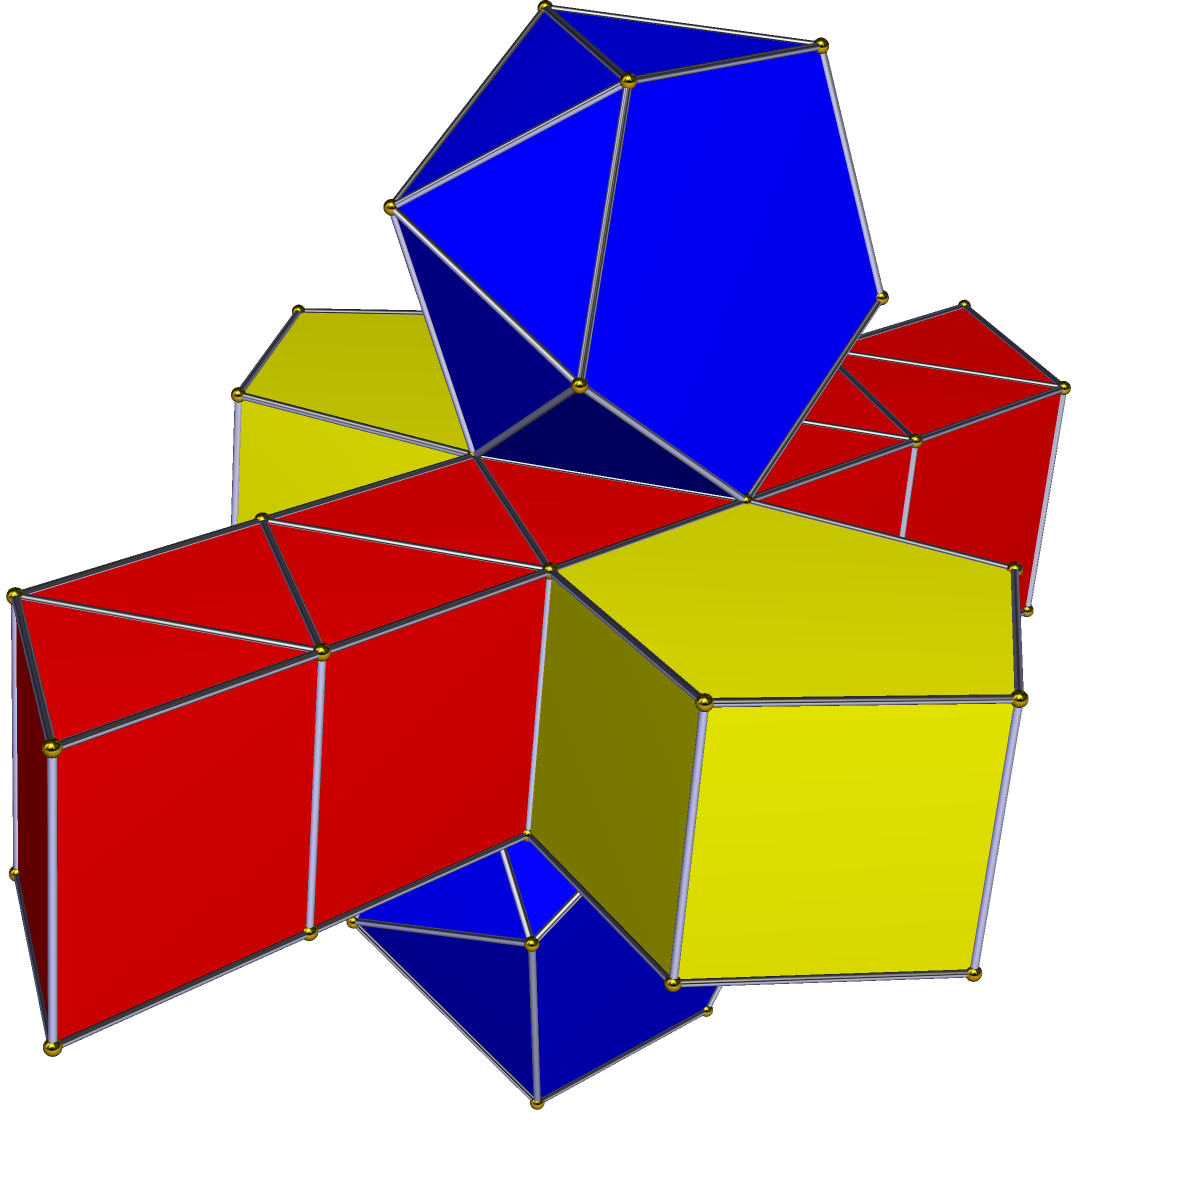 File:Pentagonal antiprismatic prism net.png - Wikimedia ...